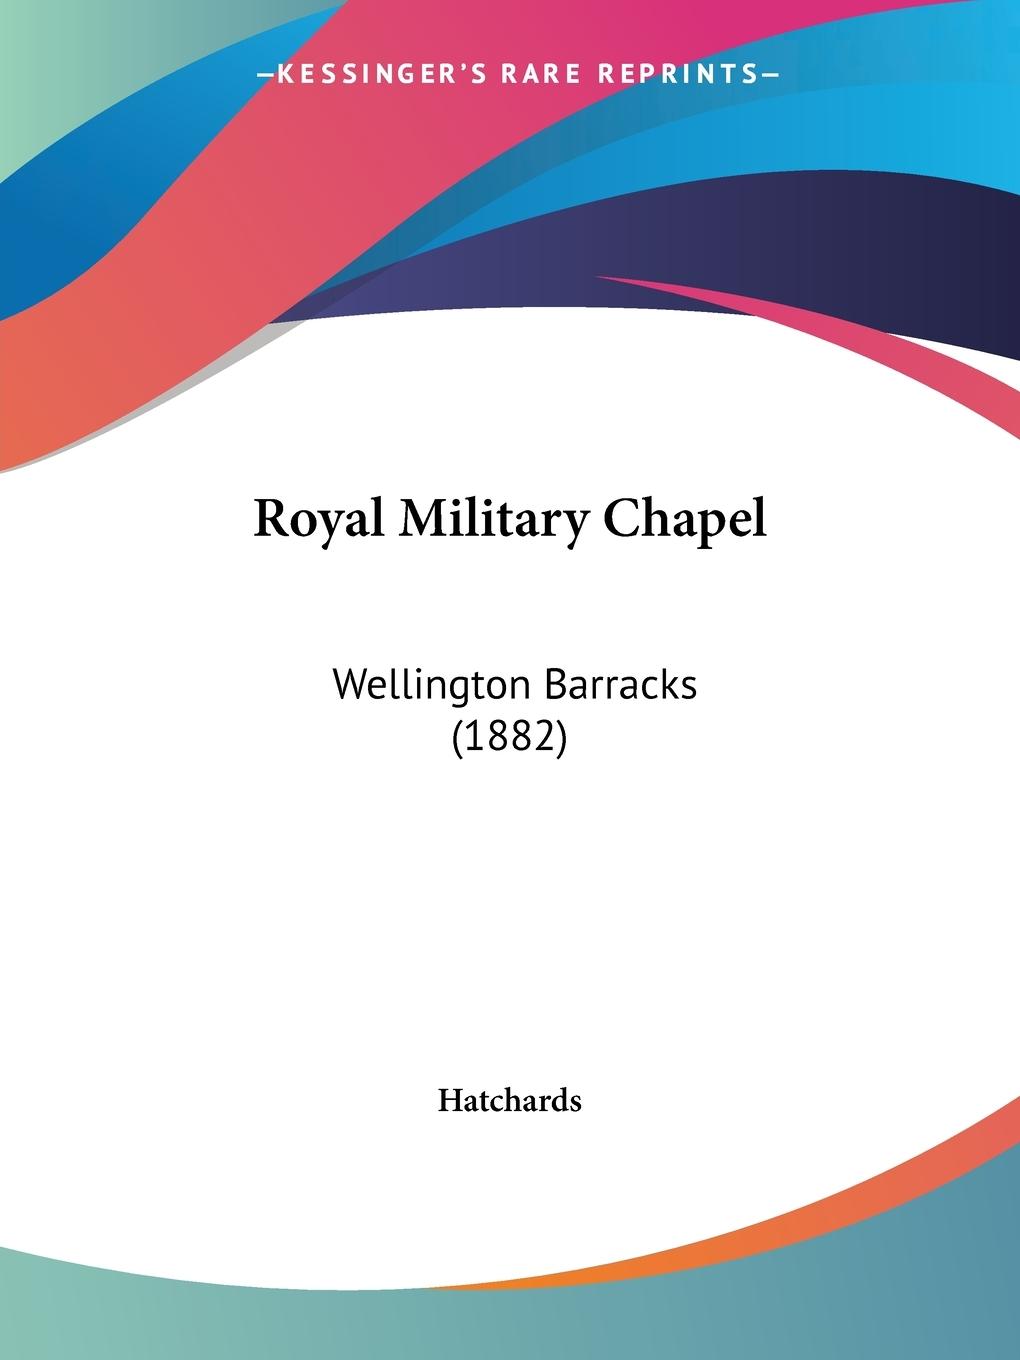 Royal Military Chapel - Hatchards